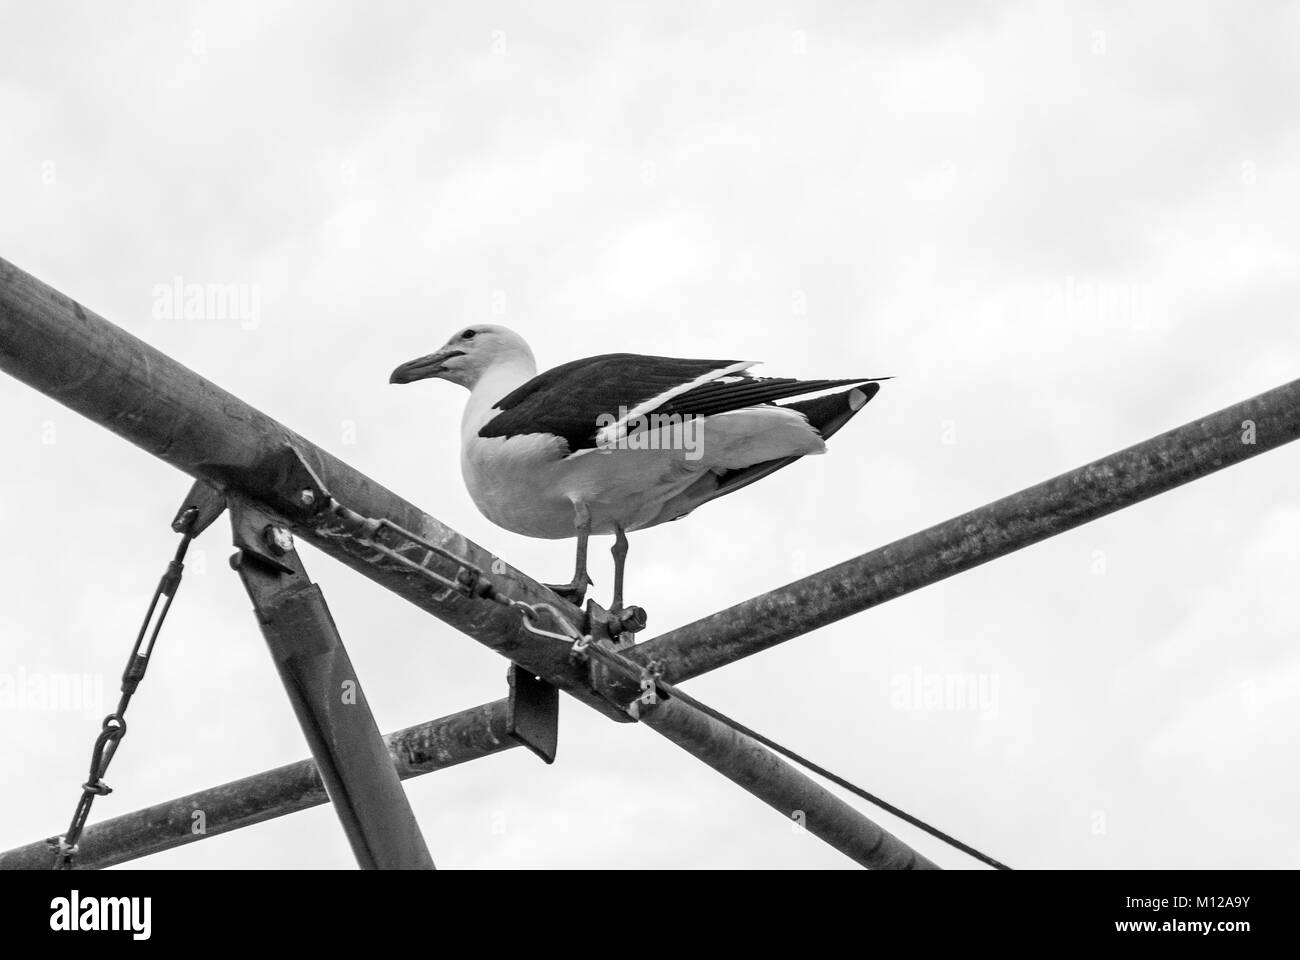 Big Seagull standing over metal pipes. Black and white photo. Cenital view. Punta del Este, Uruguay. Stock Photo